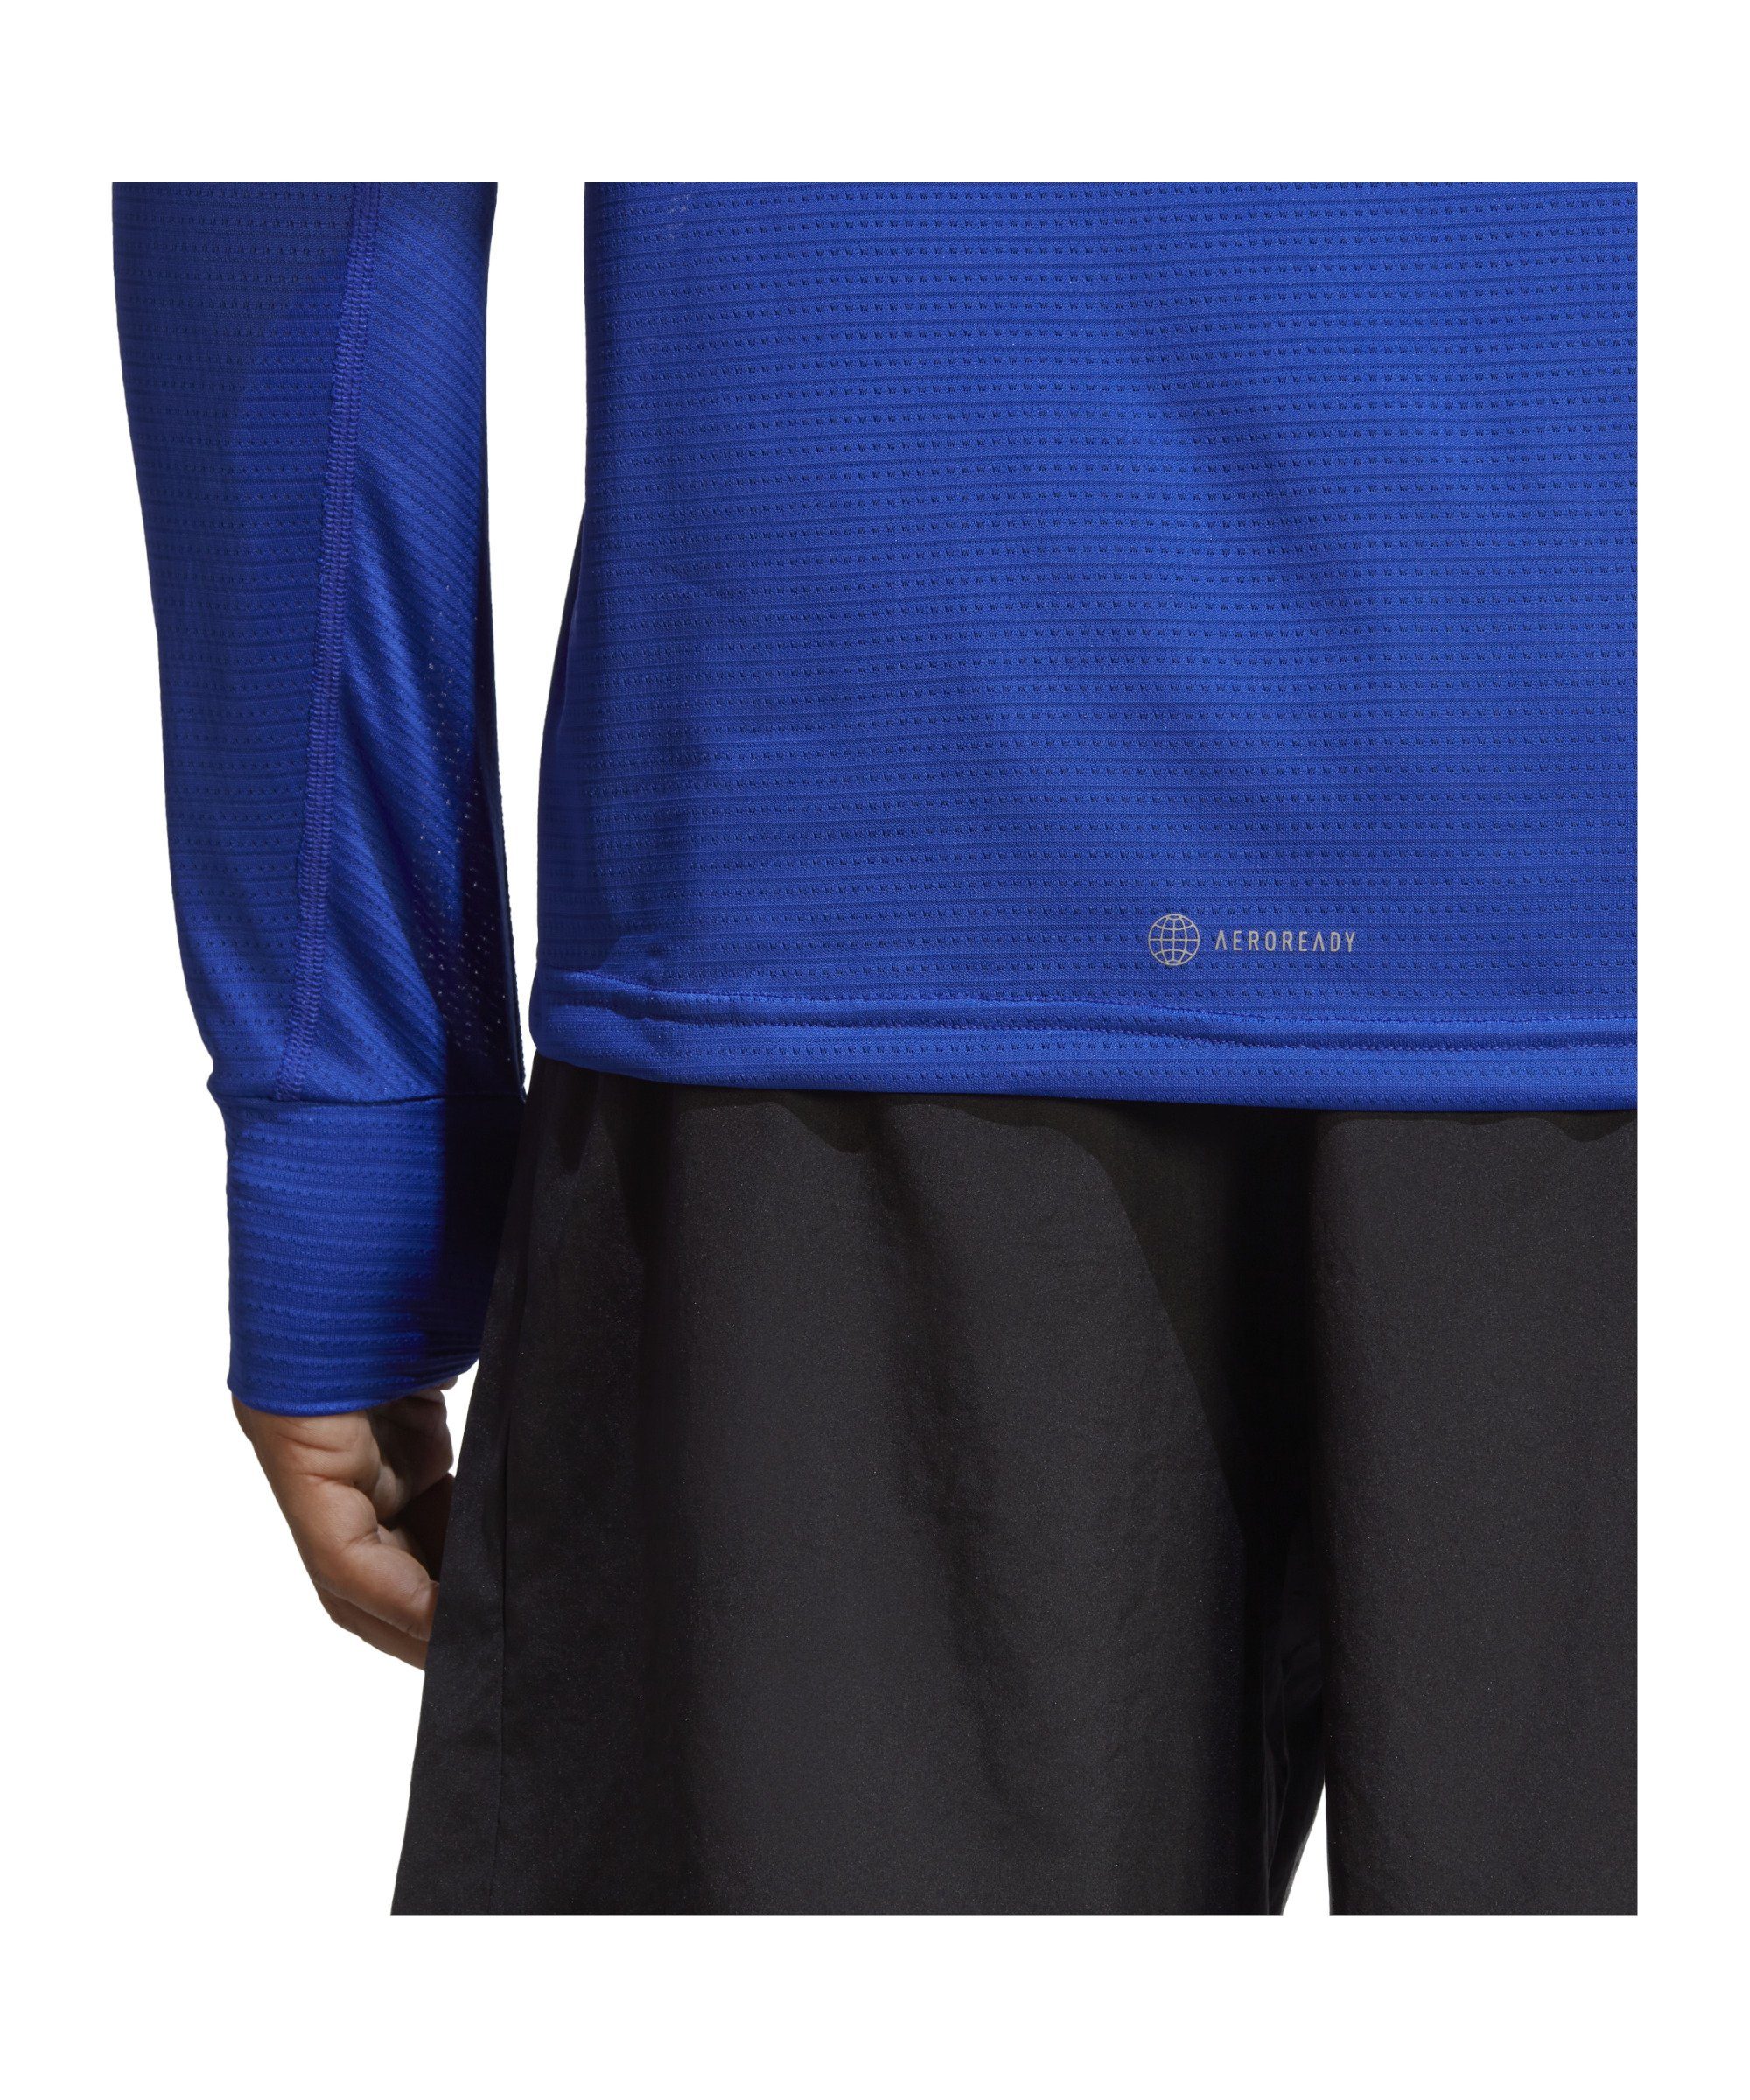 adidas default Performance Lauftop Run Own the blau Sweatshirt